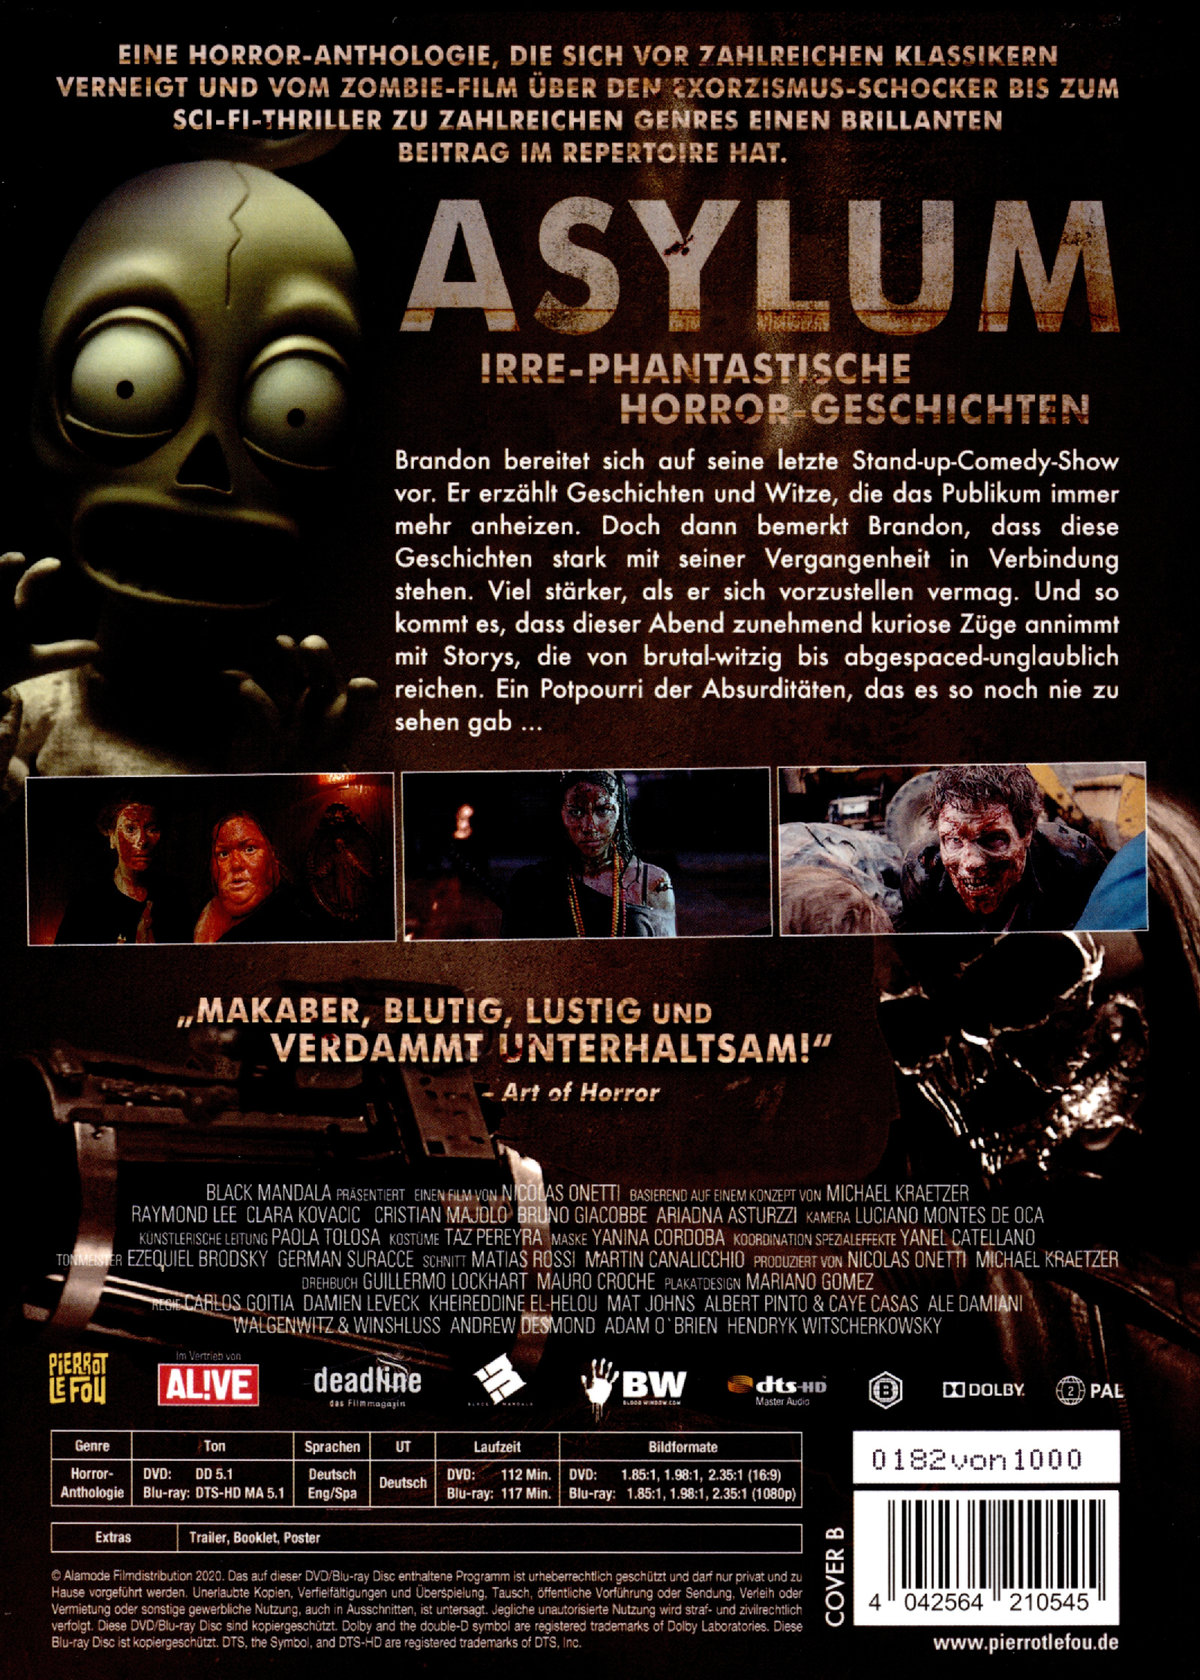 Asylum - Irre-phantastische Horror-Geschichten - Uncut Mediabook Edition (DVD+blu-ray) (B)